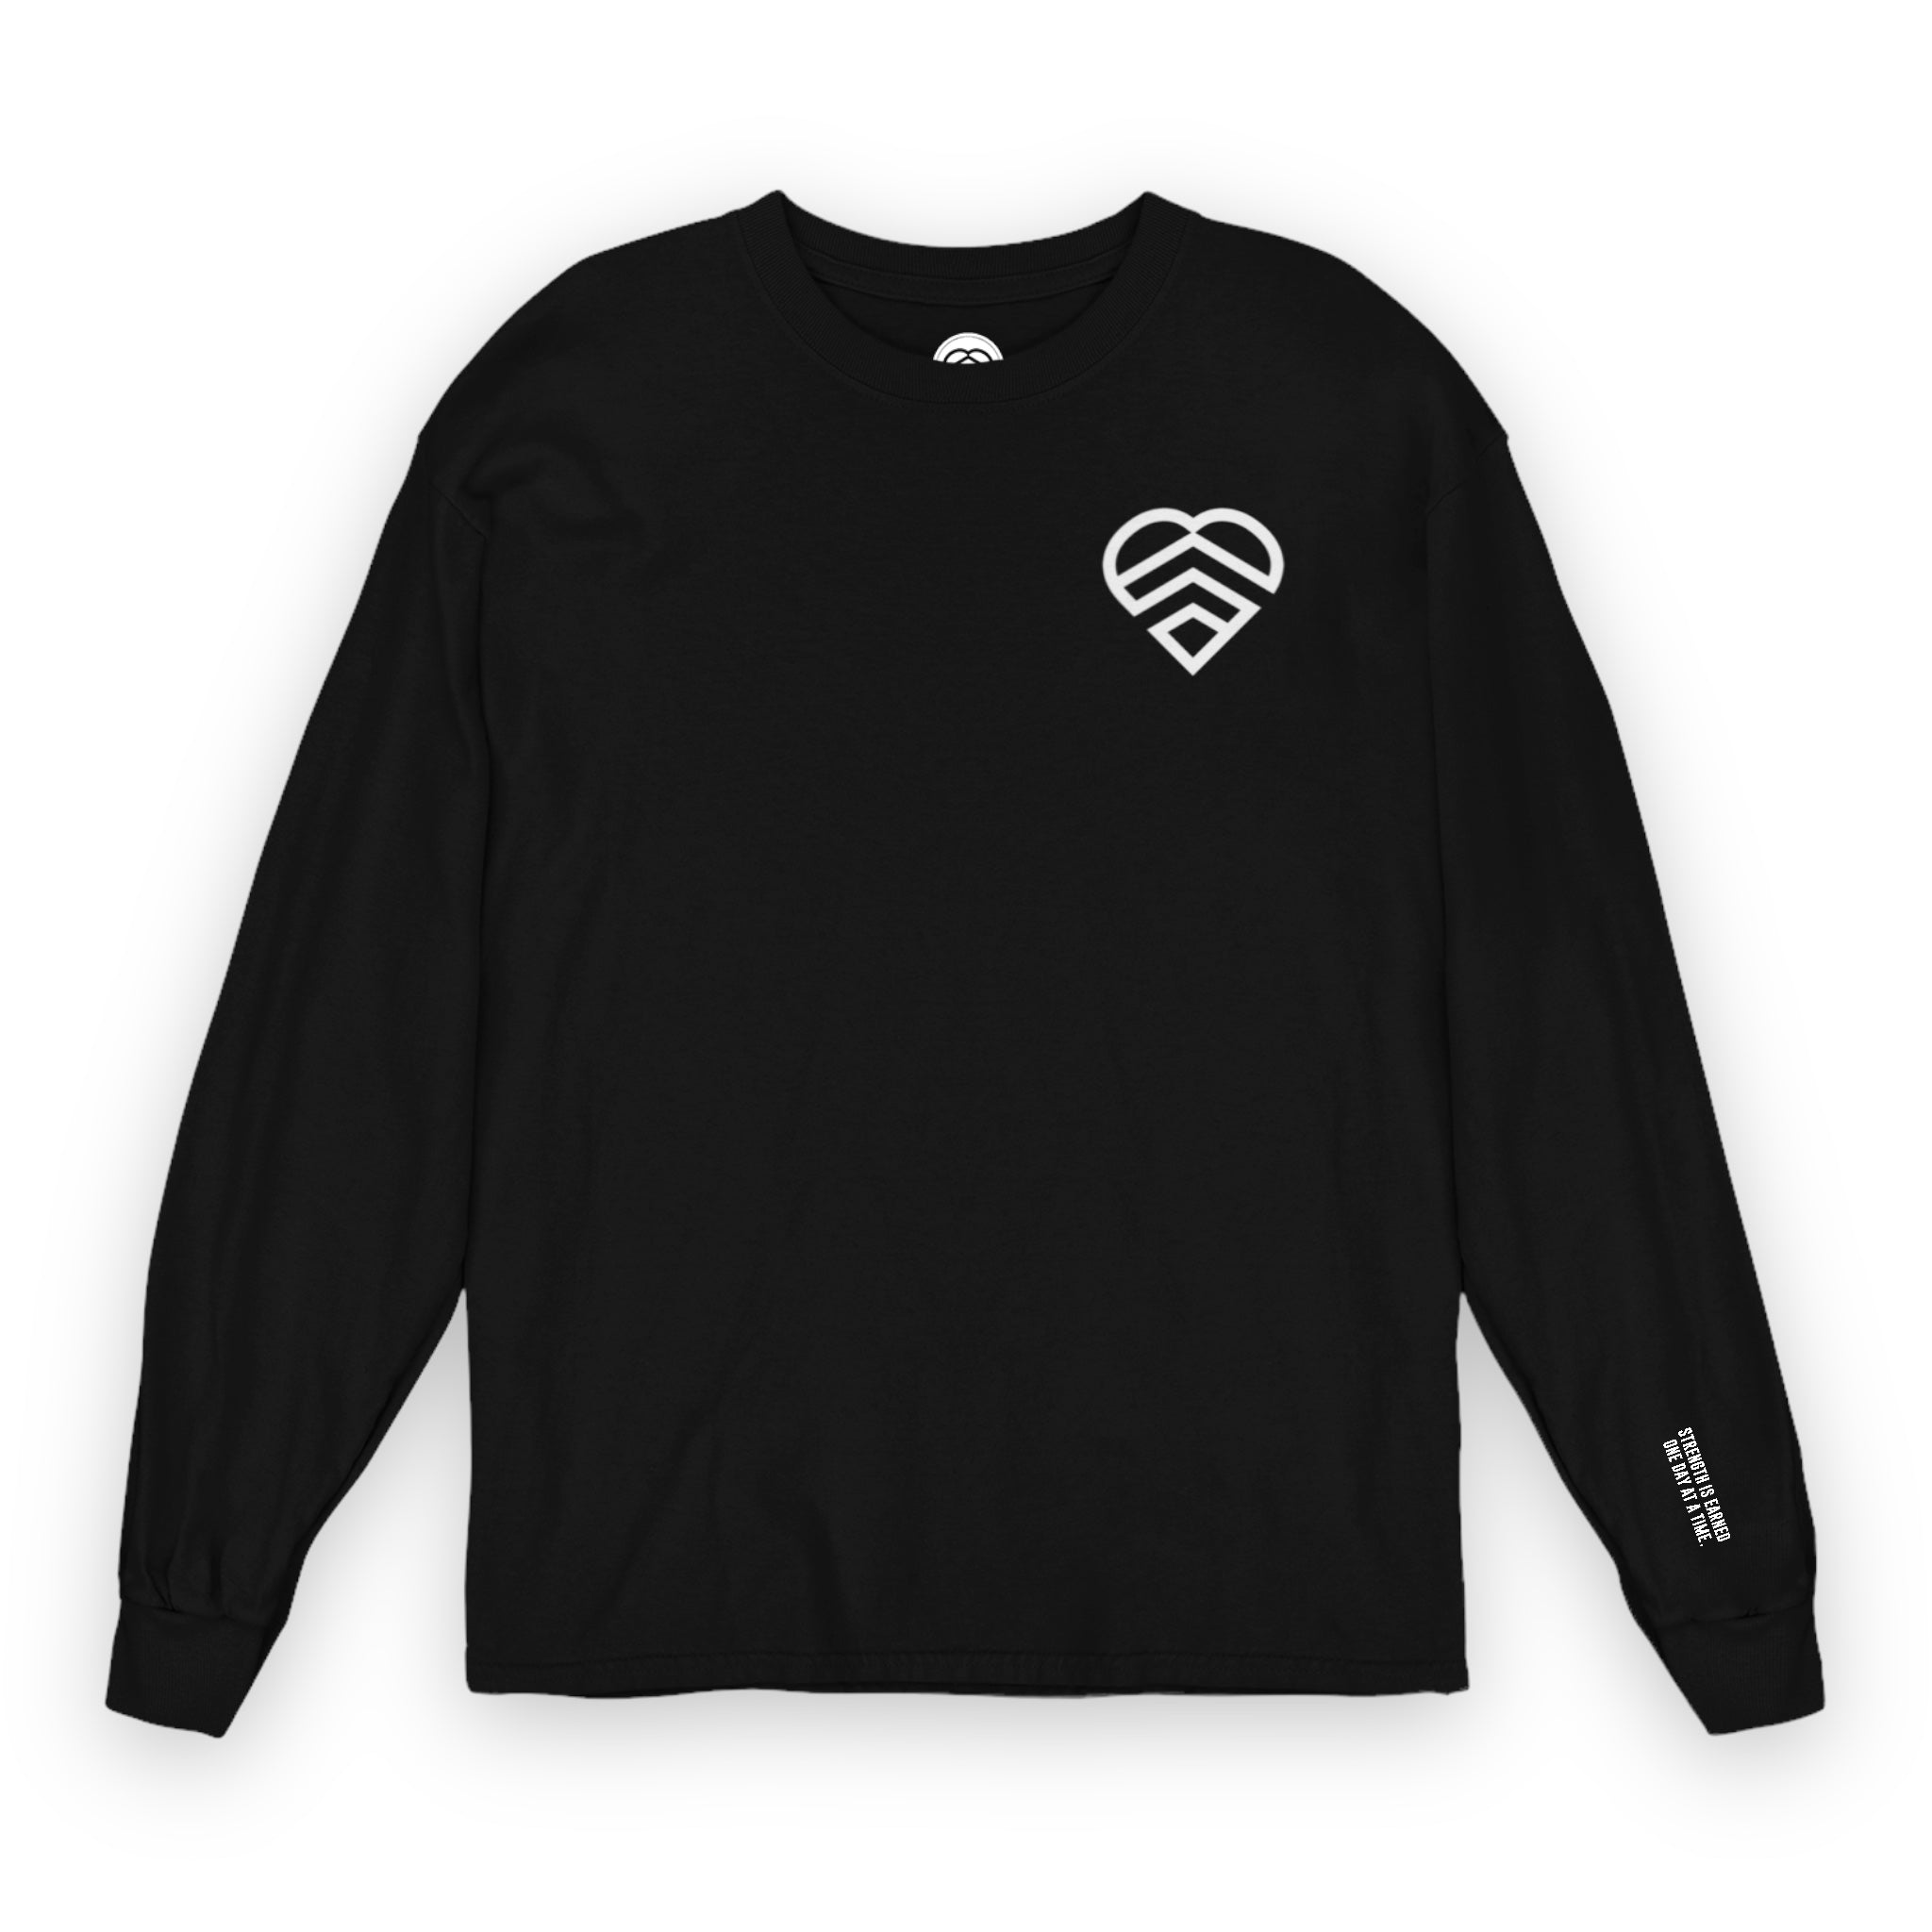 Mindset Club Long Sleeve Logo Shirt - Black